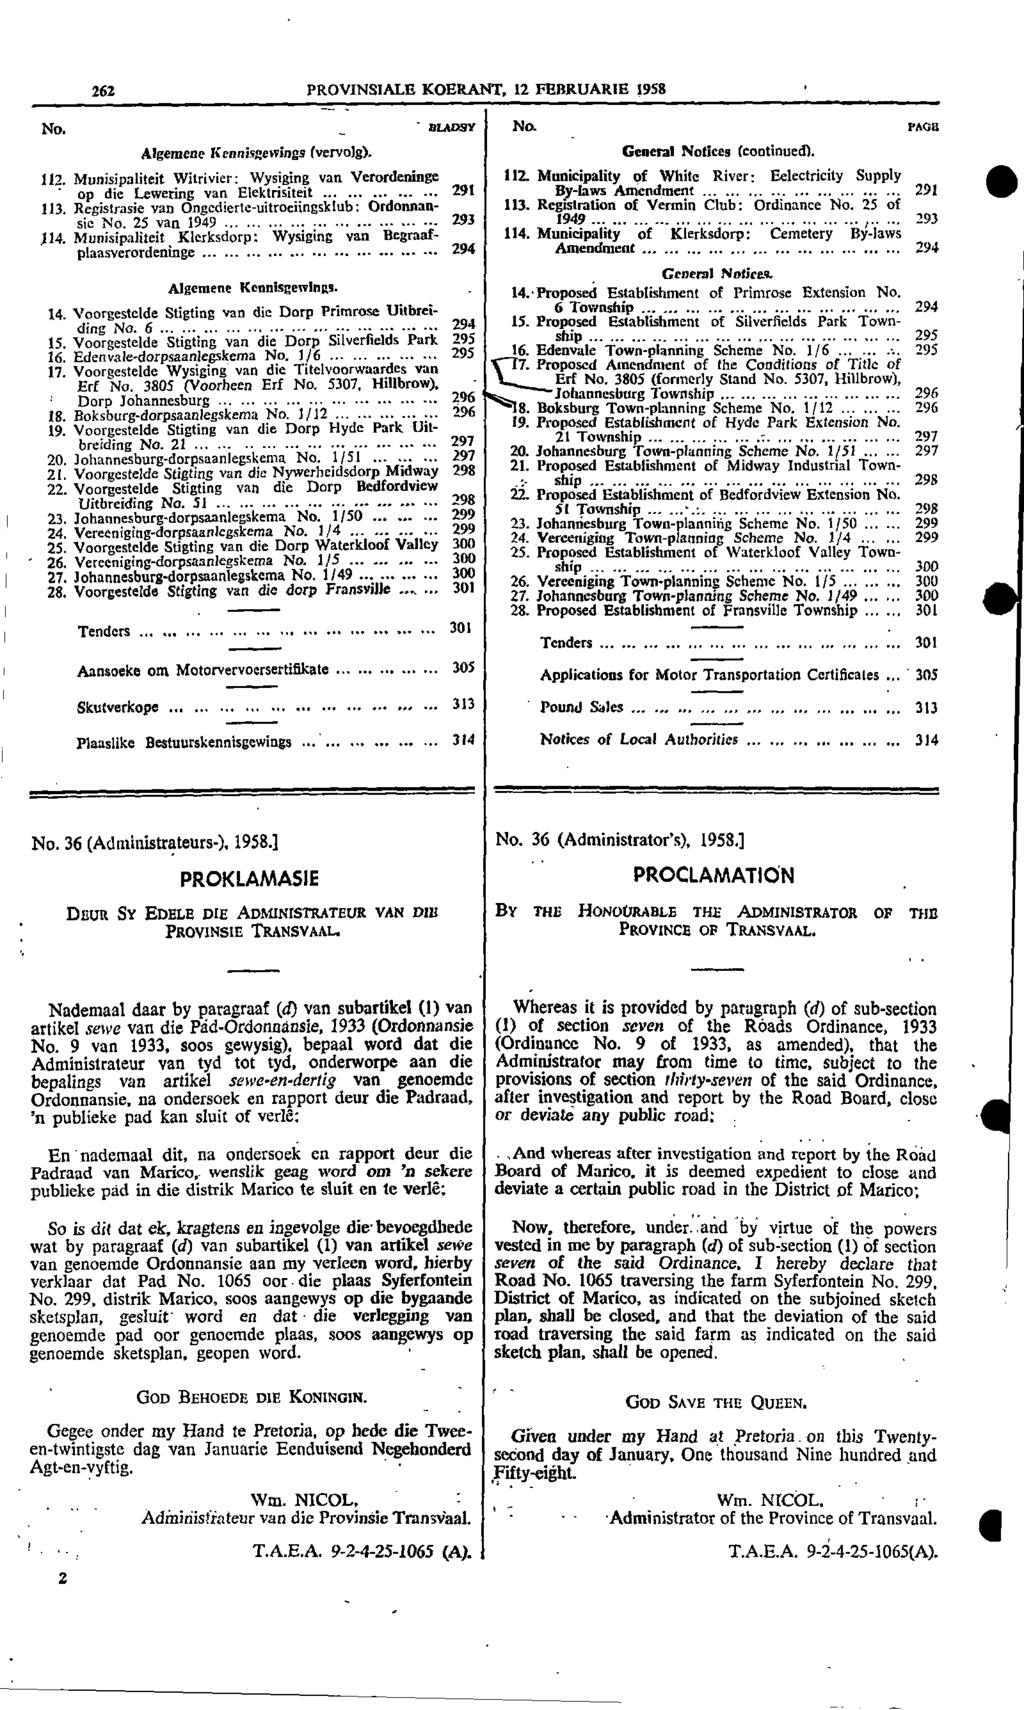 No 262 PROVINSIALE KOERANT, 12 FEBRUARIE 1958 arson Na PAGII Algemene Kennisnewings (vervoig) General Notices (continued) 112 Munisipaliteit Witrivier: Wysiging van Verordeninge 112 Municipality of